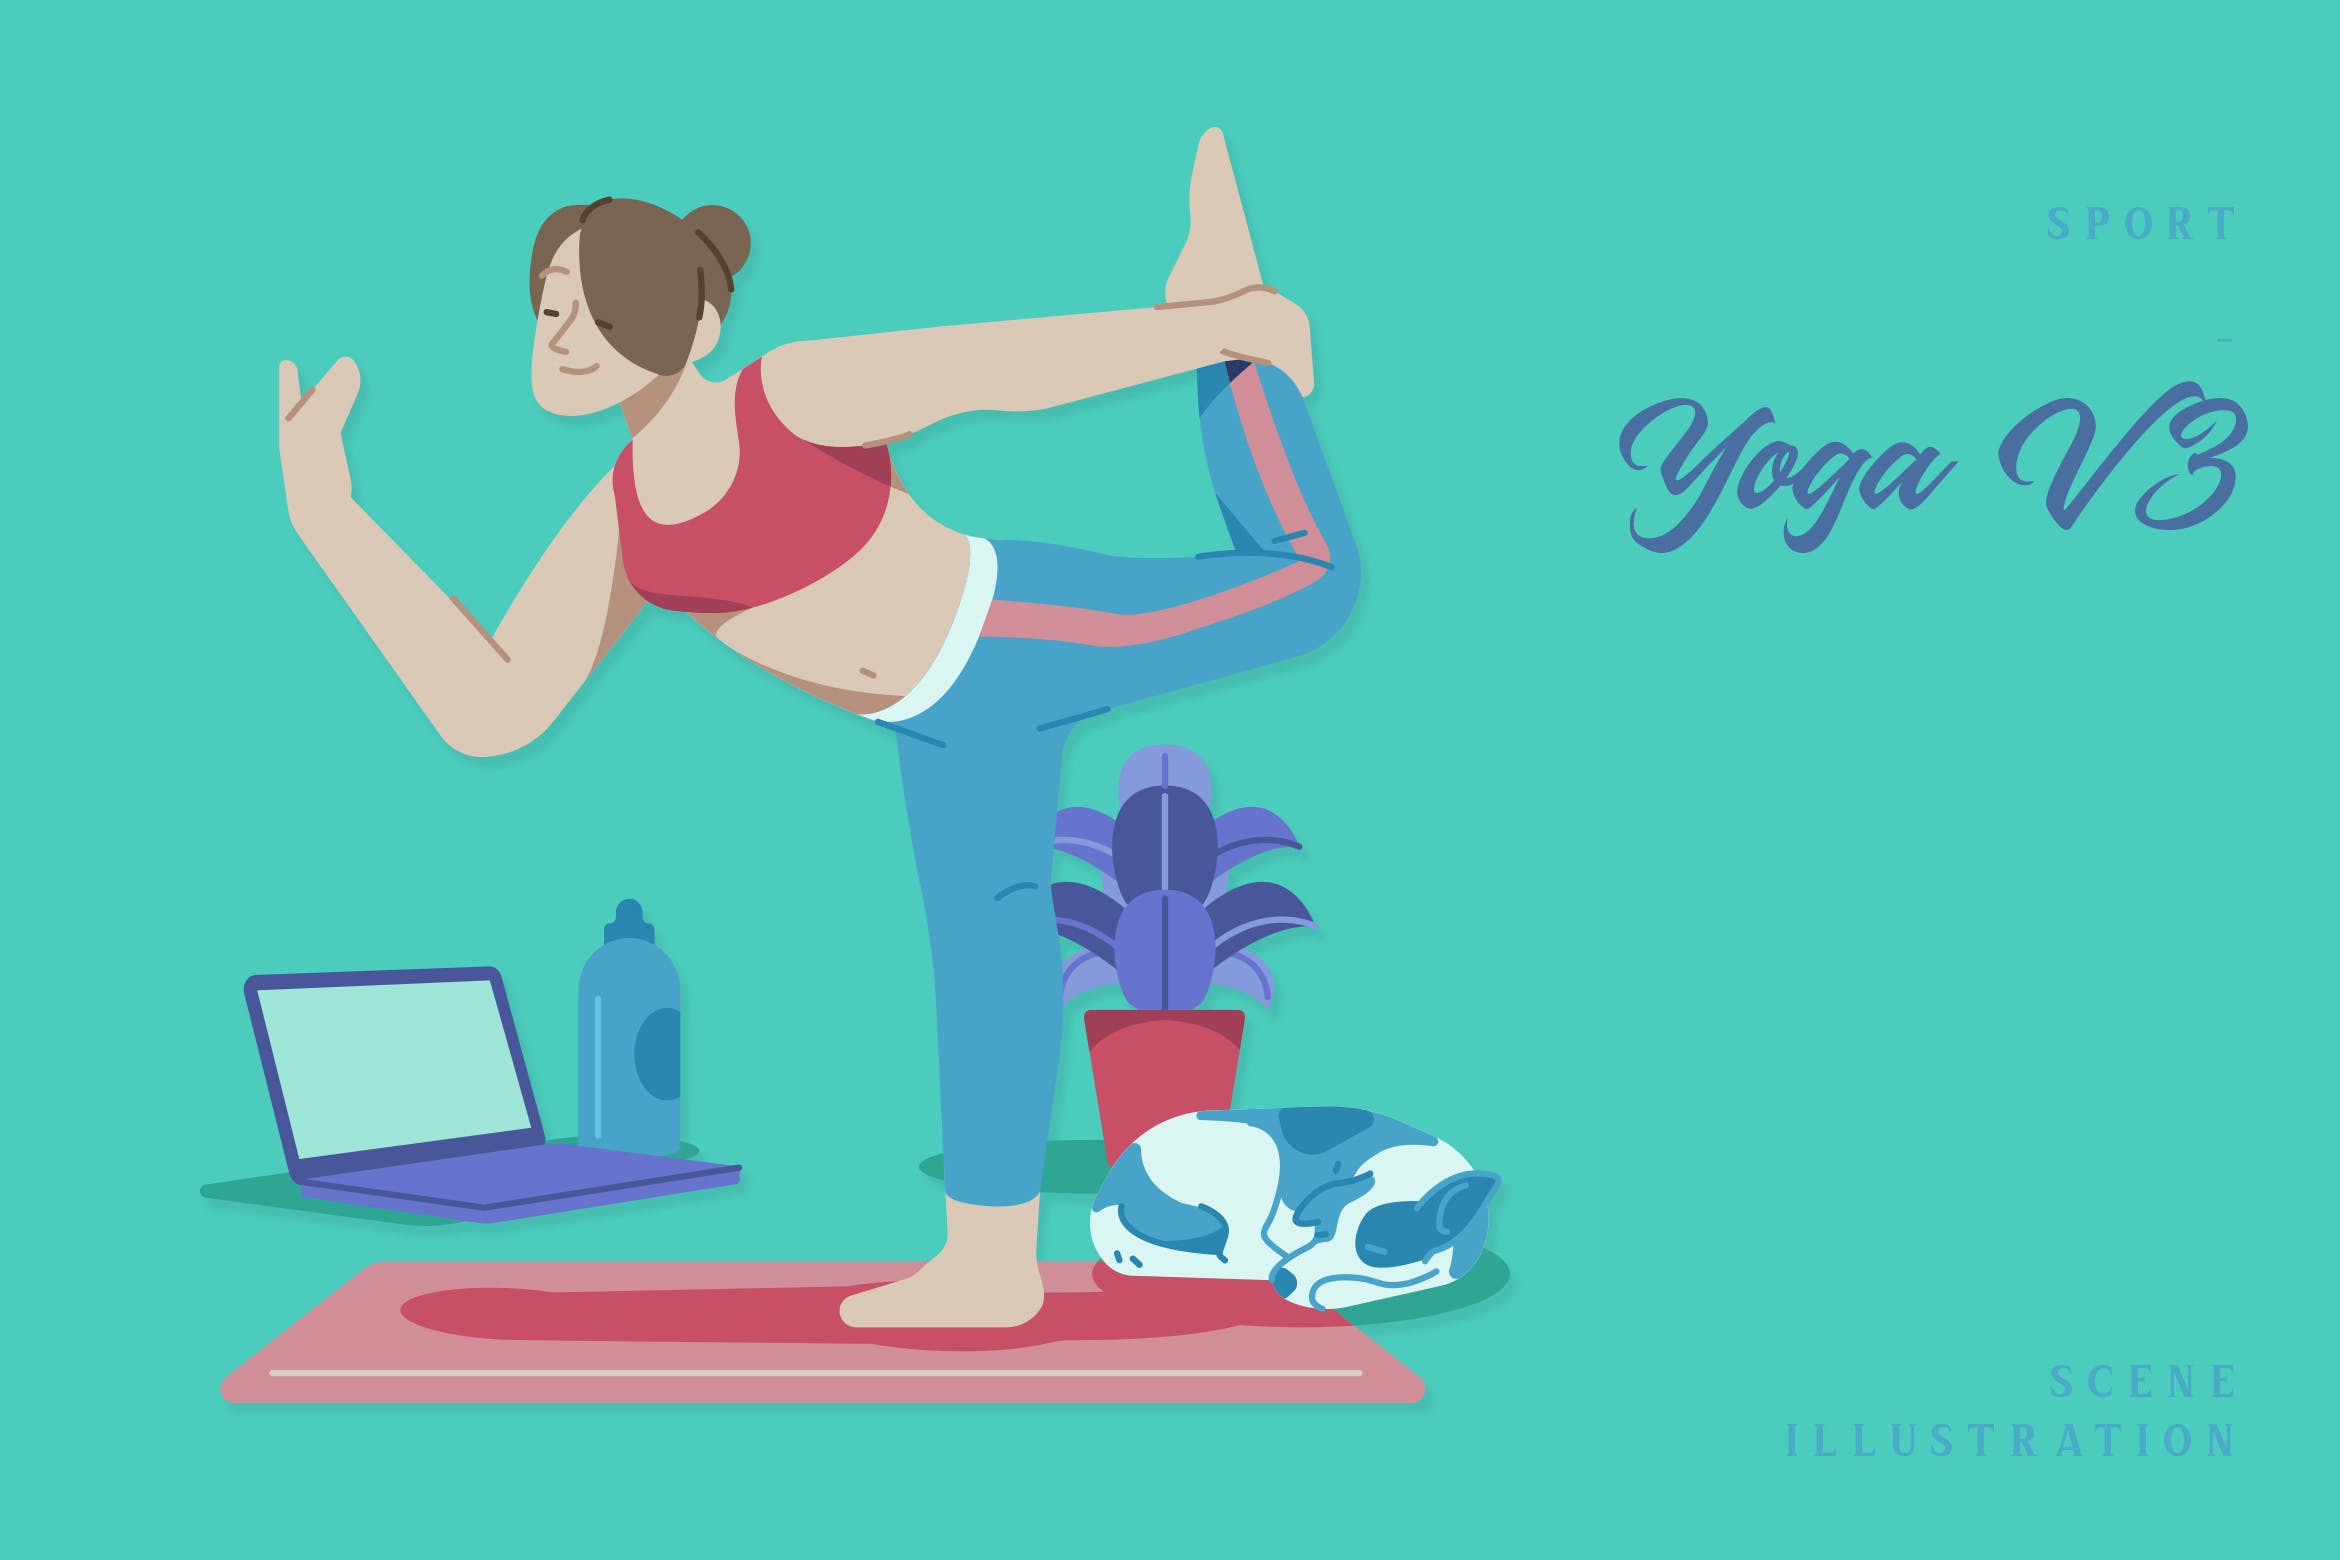 瑜伽运动场景插画v3 Sport – Yoga V3 Scene Illustration 图片素材 第1张